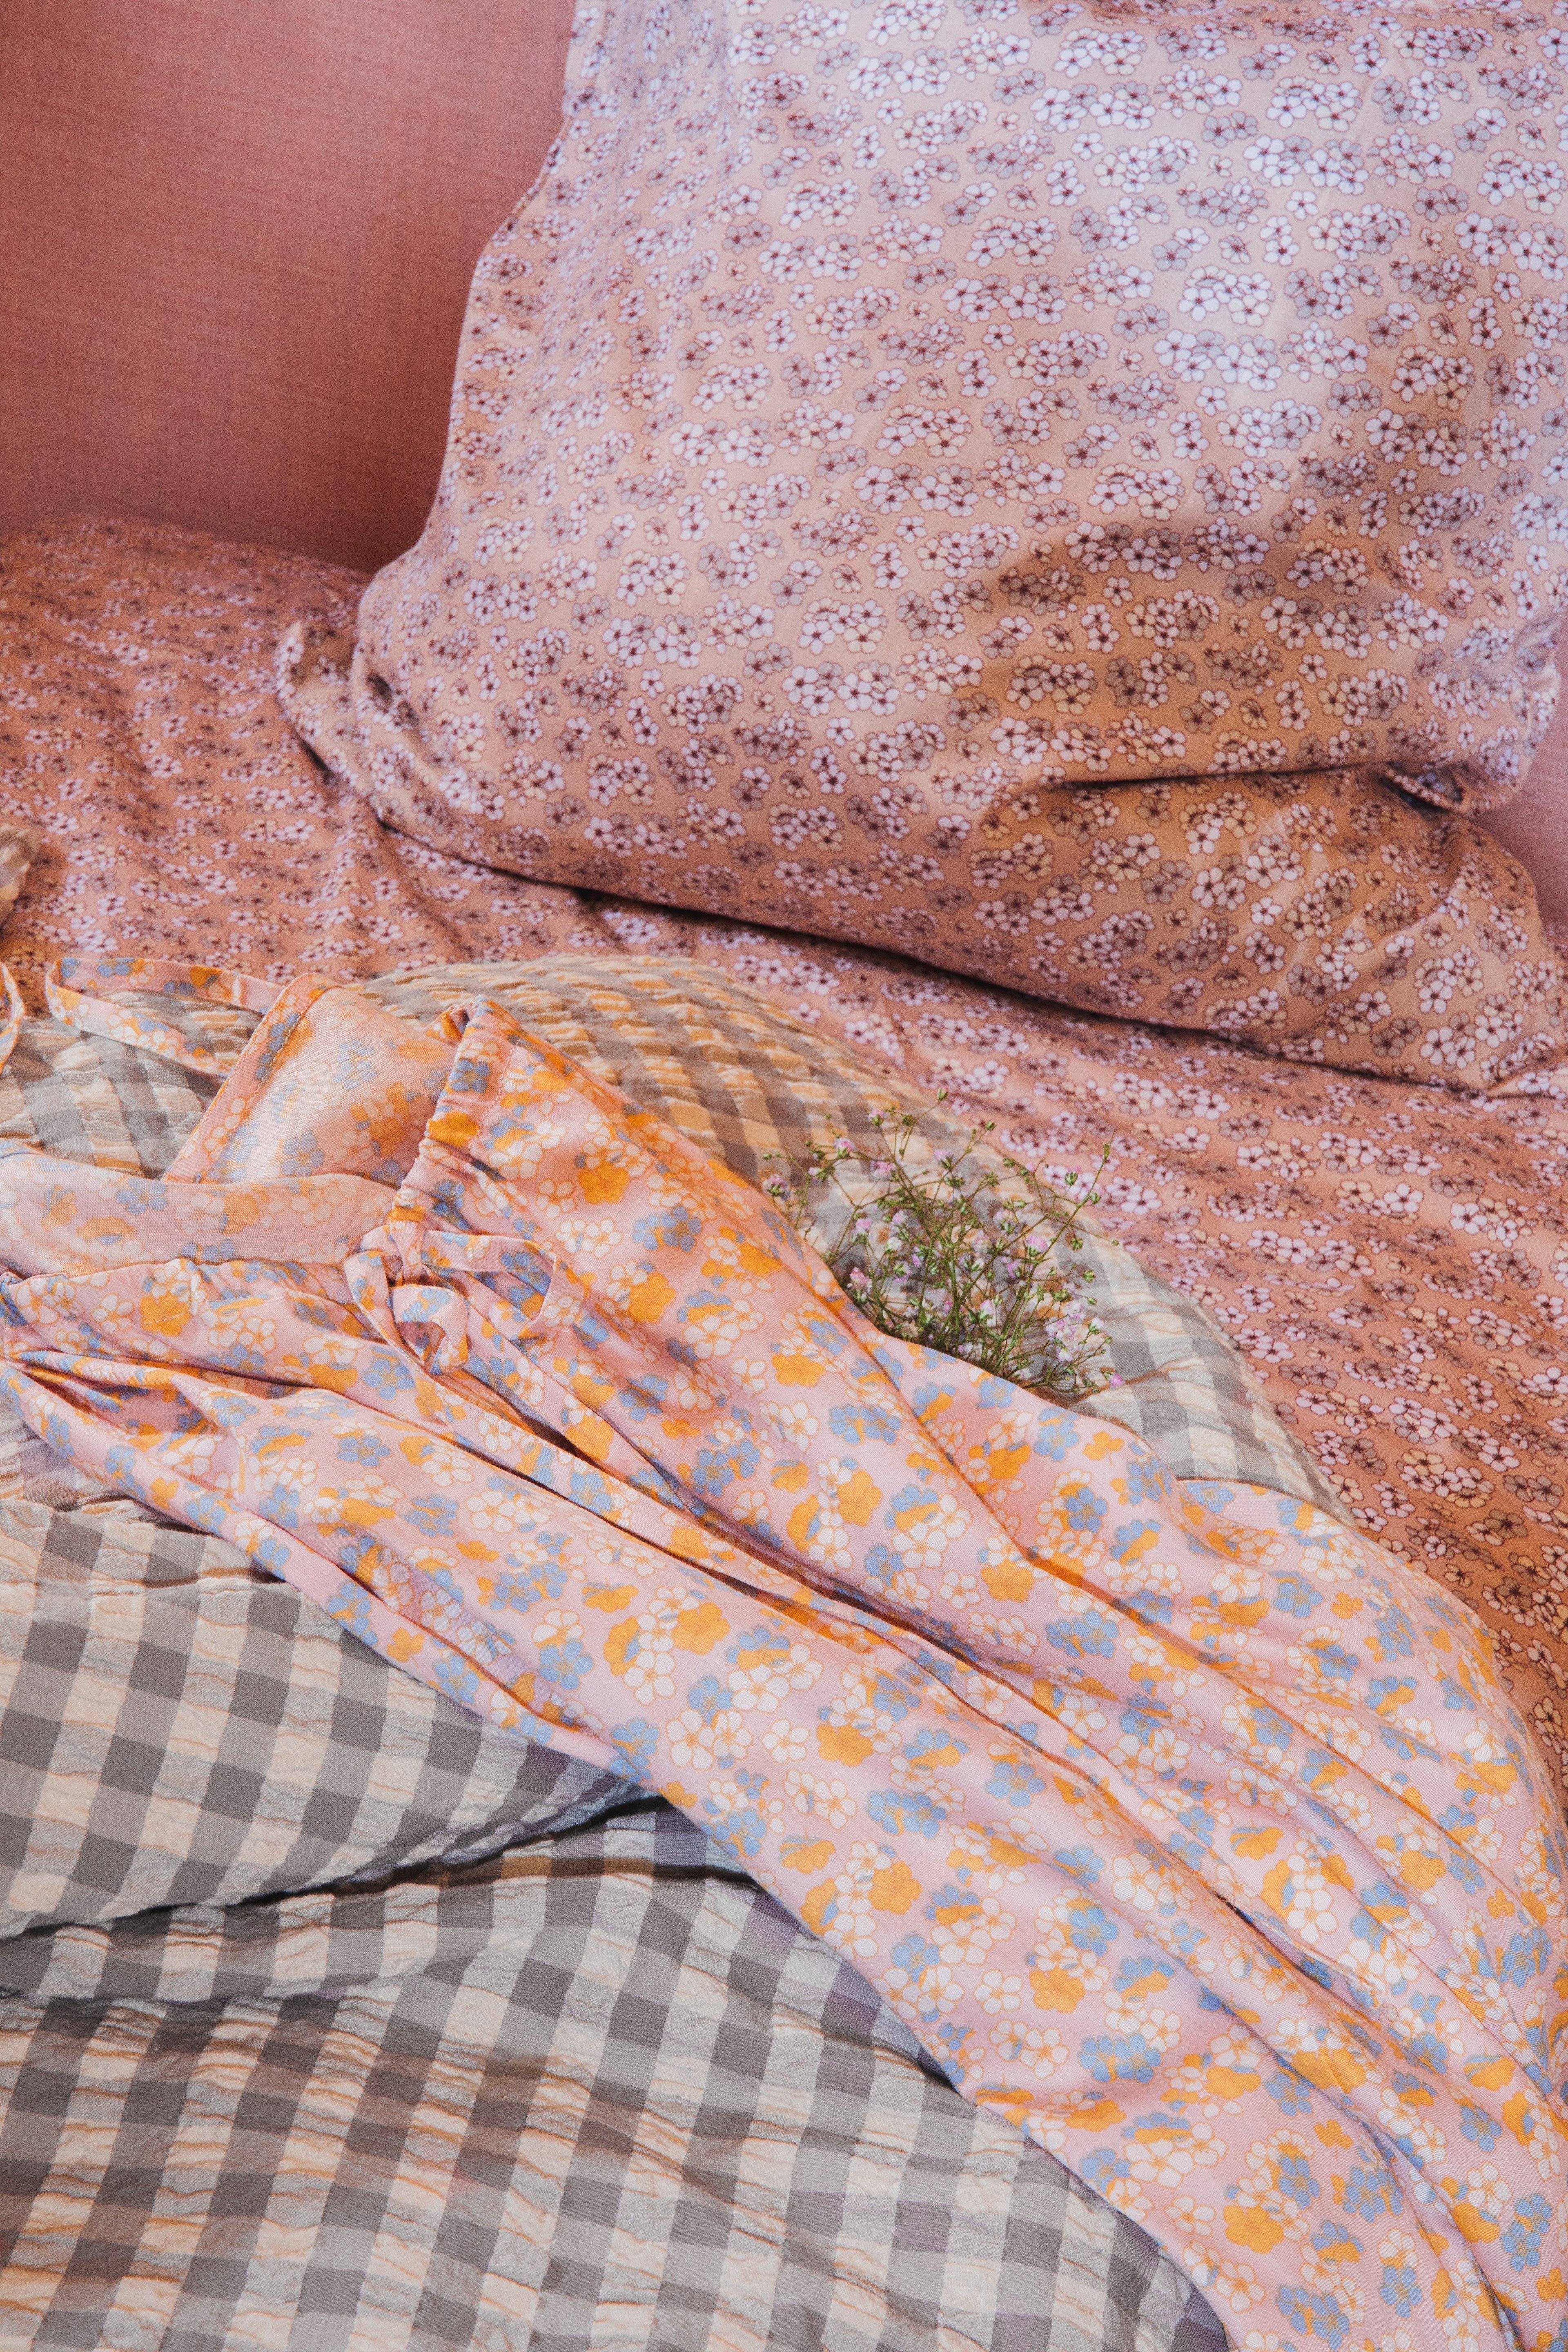 Juna  baekbolge-pleasantly monochrome beddings pajamas on bed